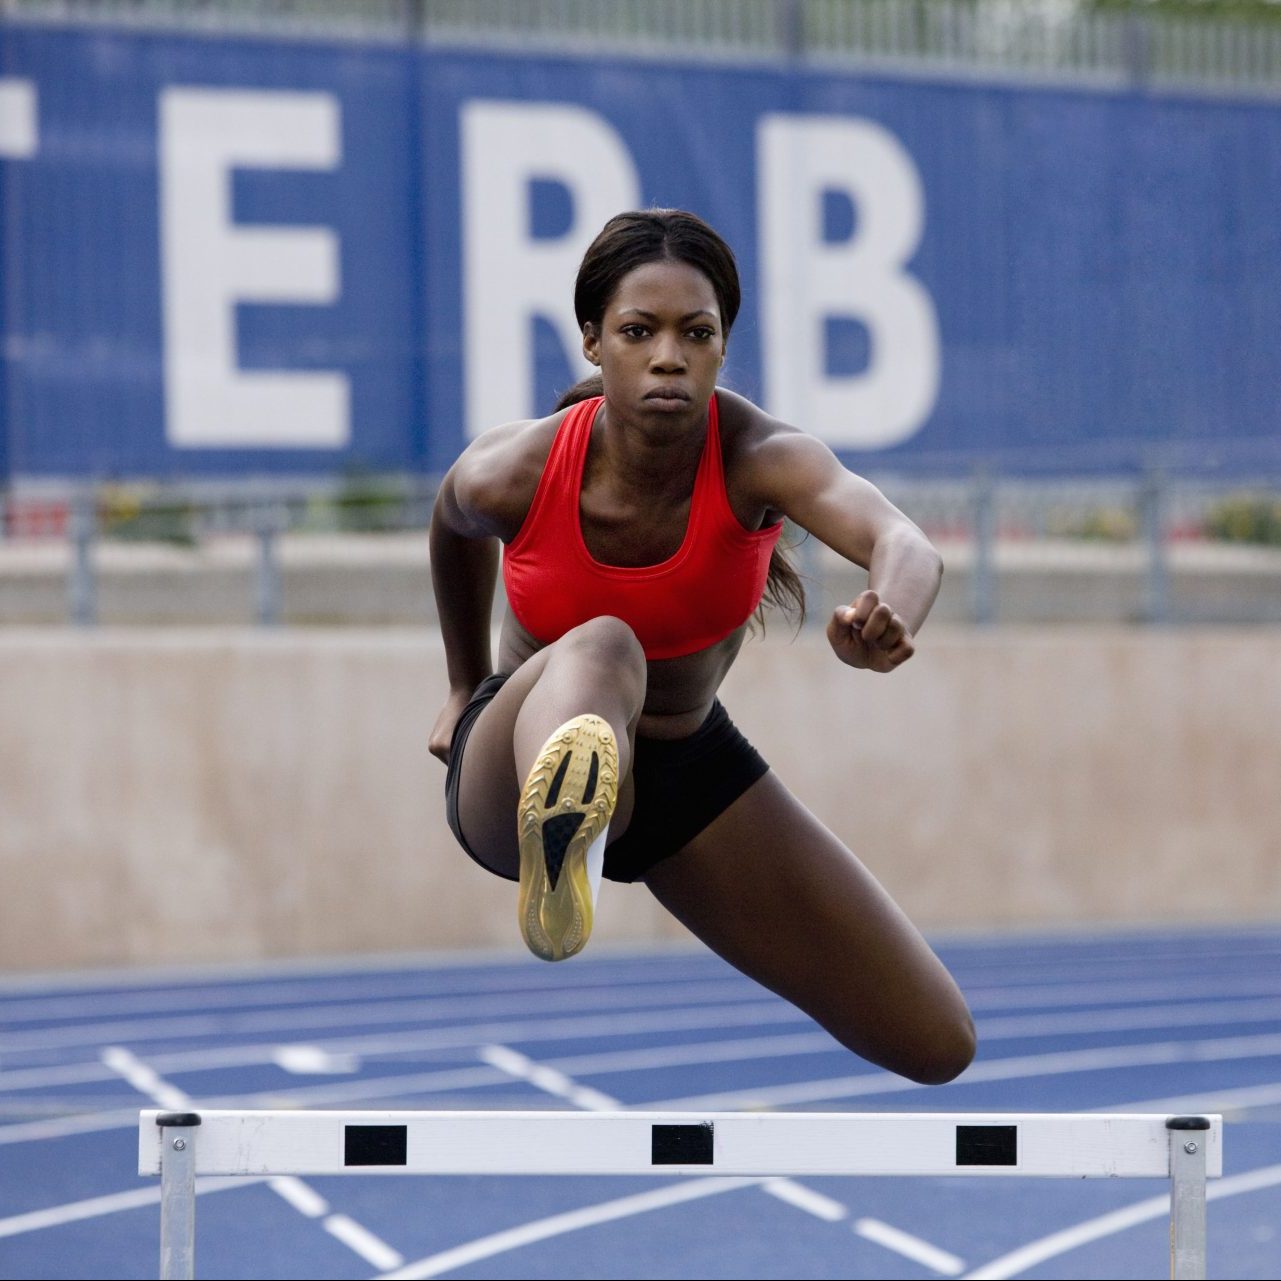 Woman jumping over a hurdle